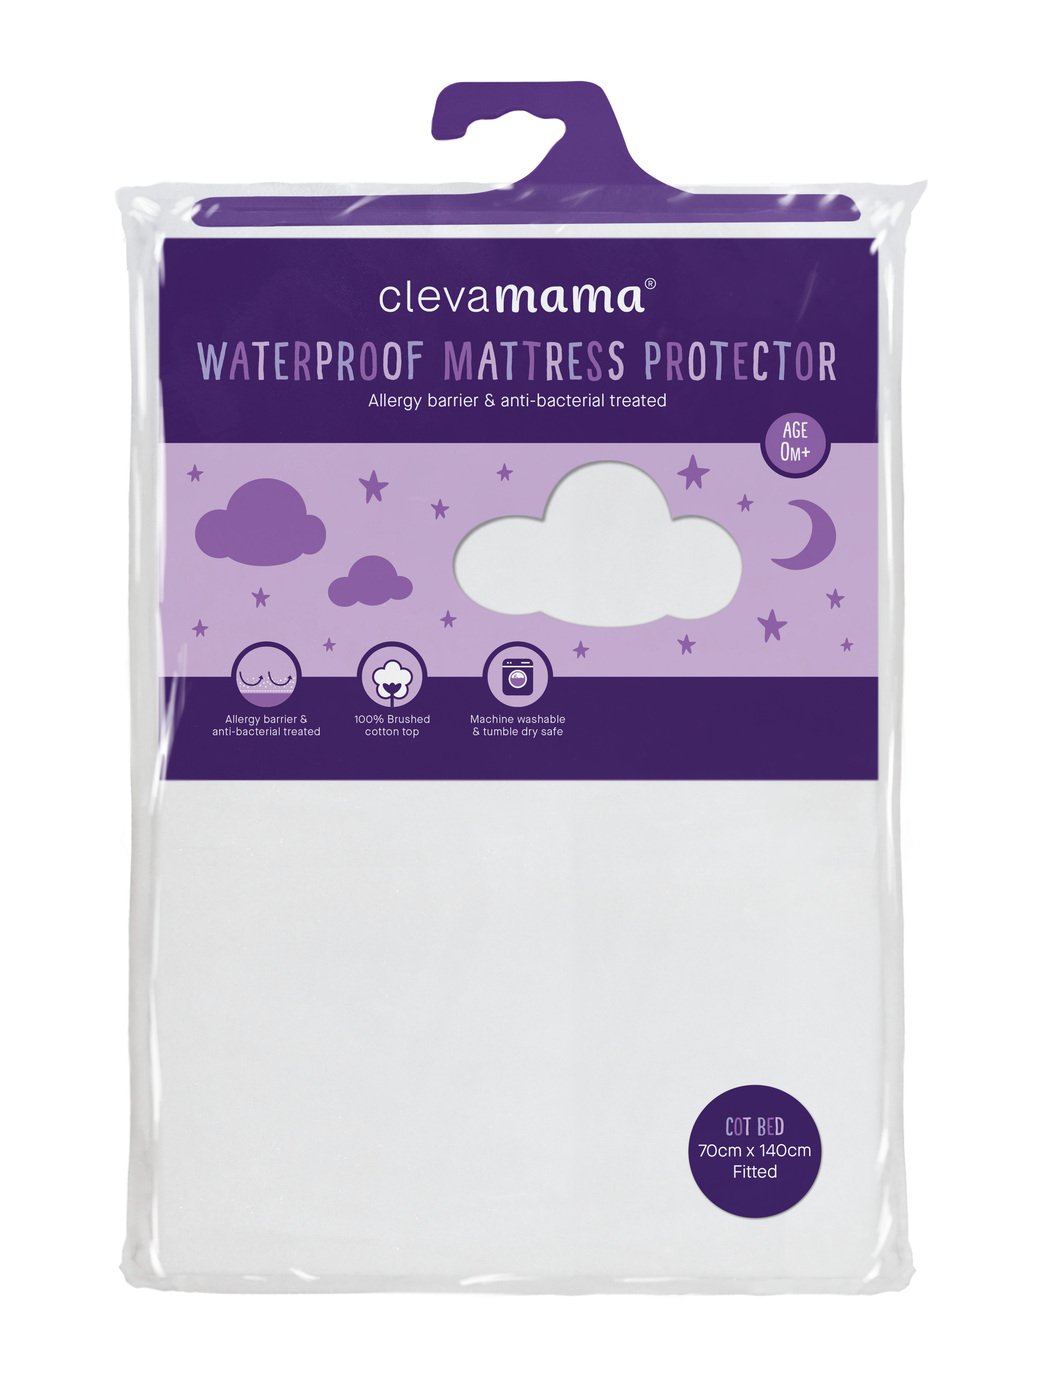 waterproof mattress protector 140 x 70